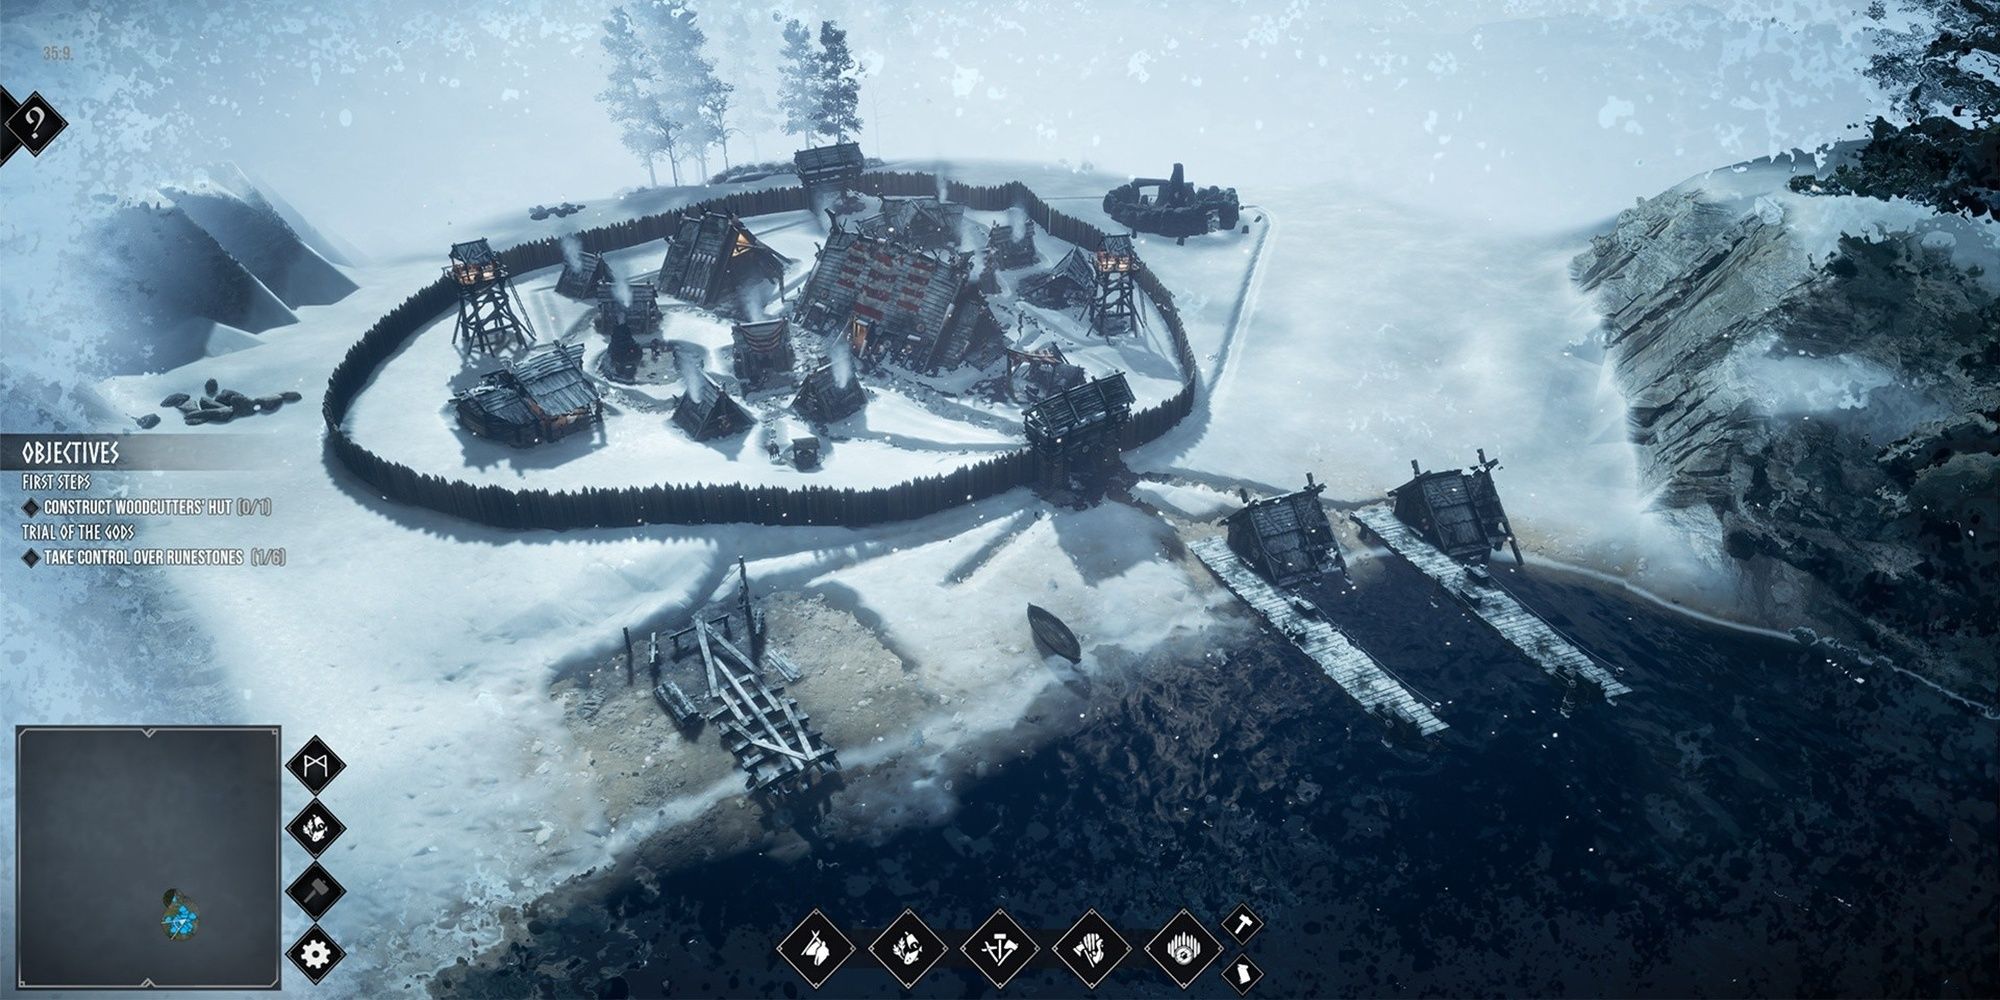 Frozenheim: Blizzard Hitting Player Settlement